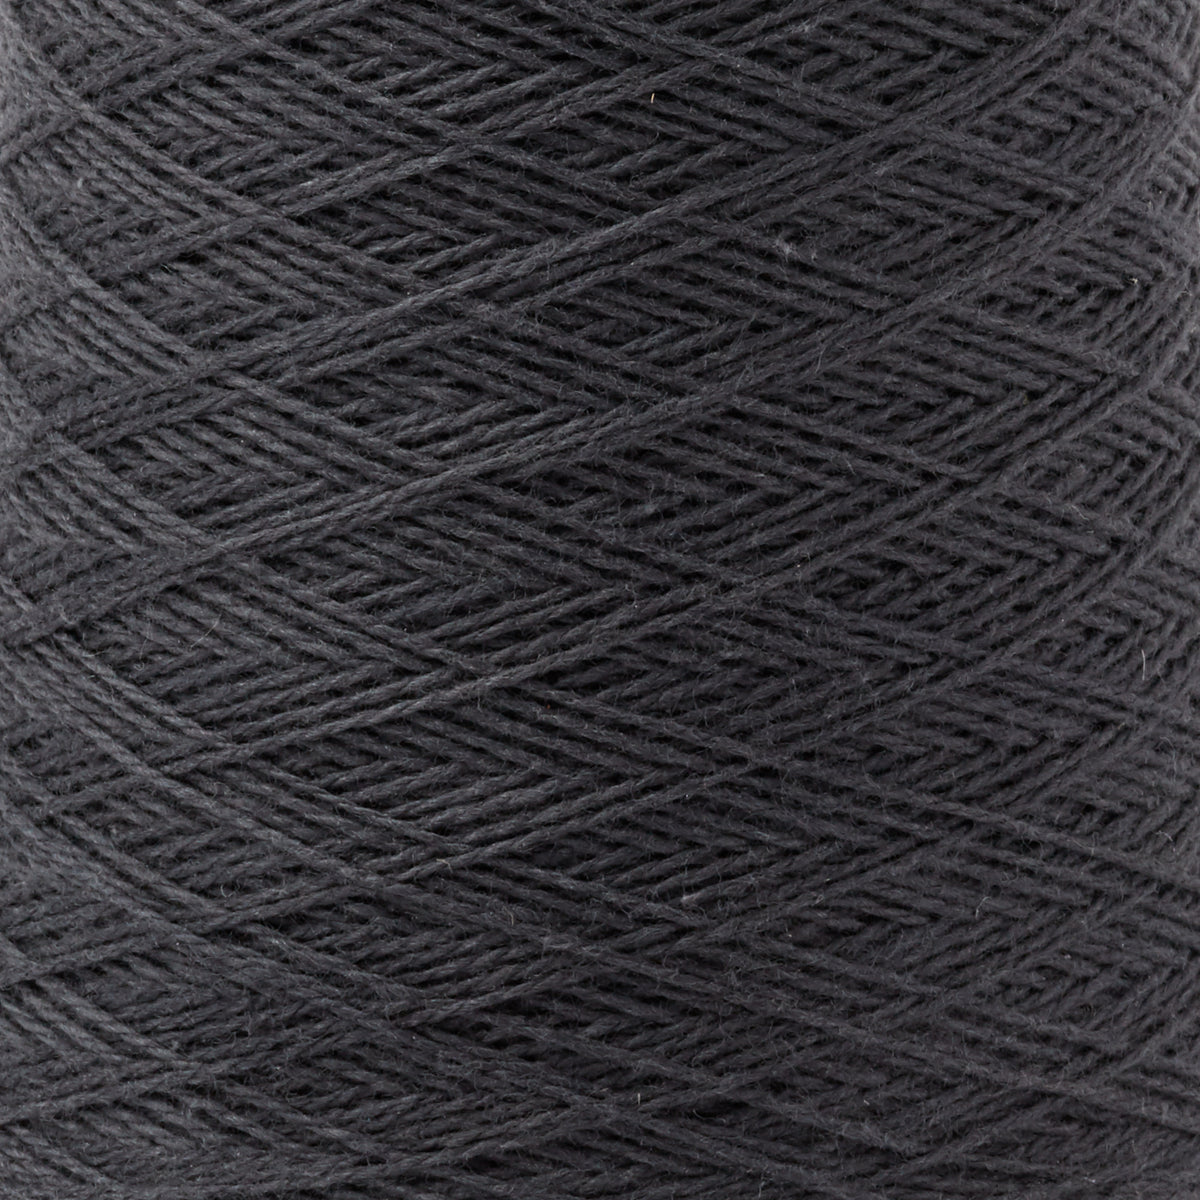 Gist Beam 3/2 organic cotton weaving yarn PACIFIC blue – Craft Emporium